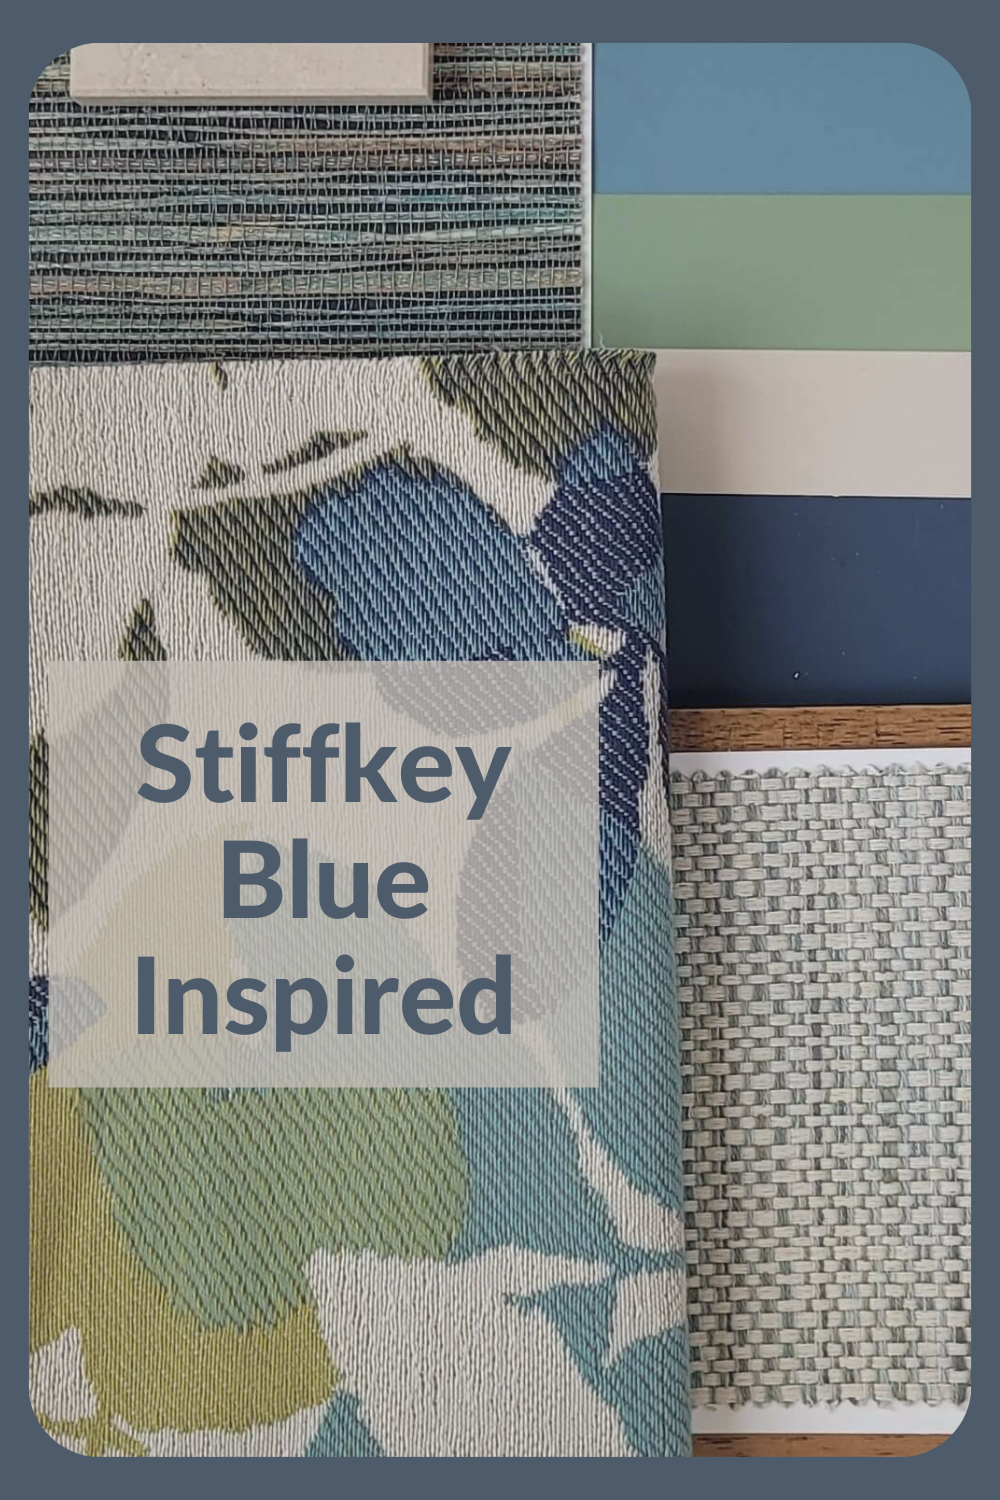 colour inspiration
palette
stiffkey blue
home decor
colour guide